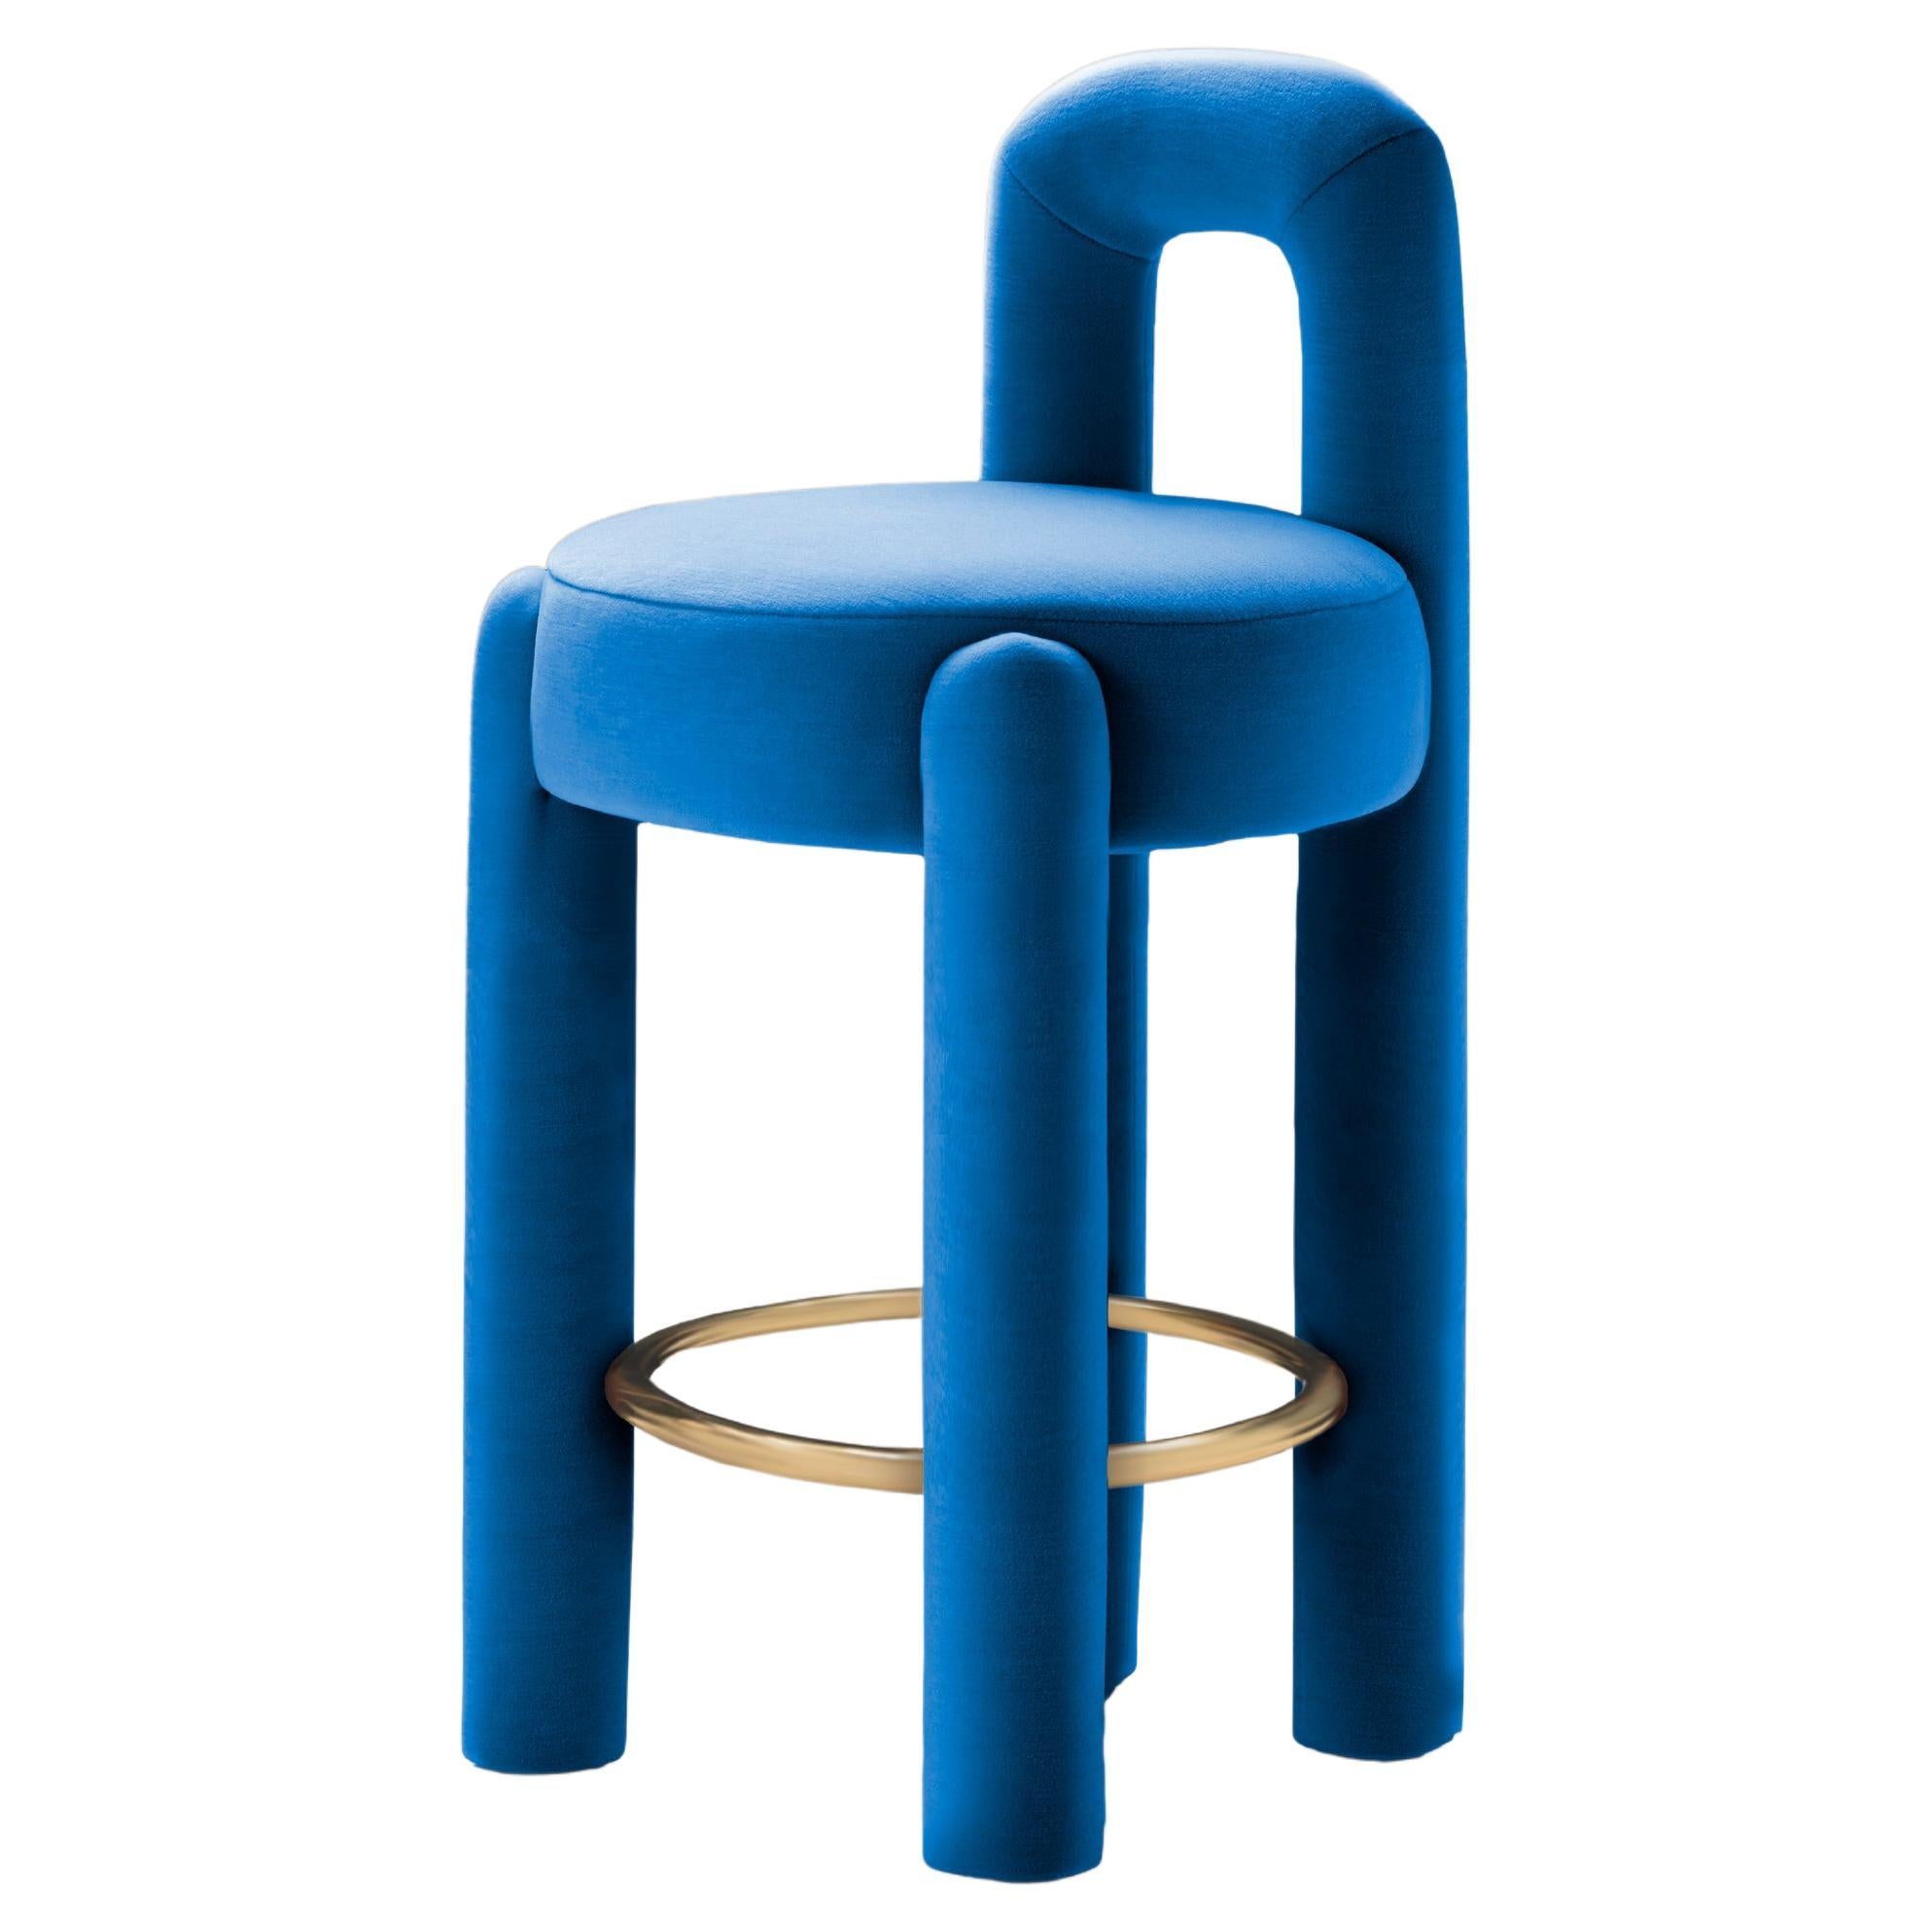 DOOQ! Organic Modern Marlon Counter Chair in Blue Kvadrat by P. Franceschini